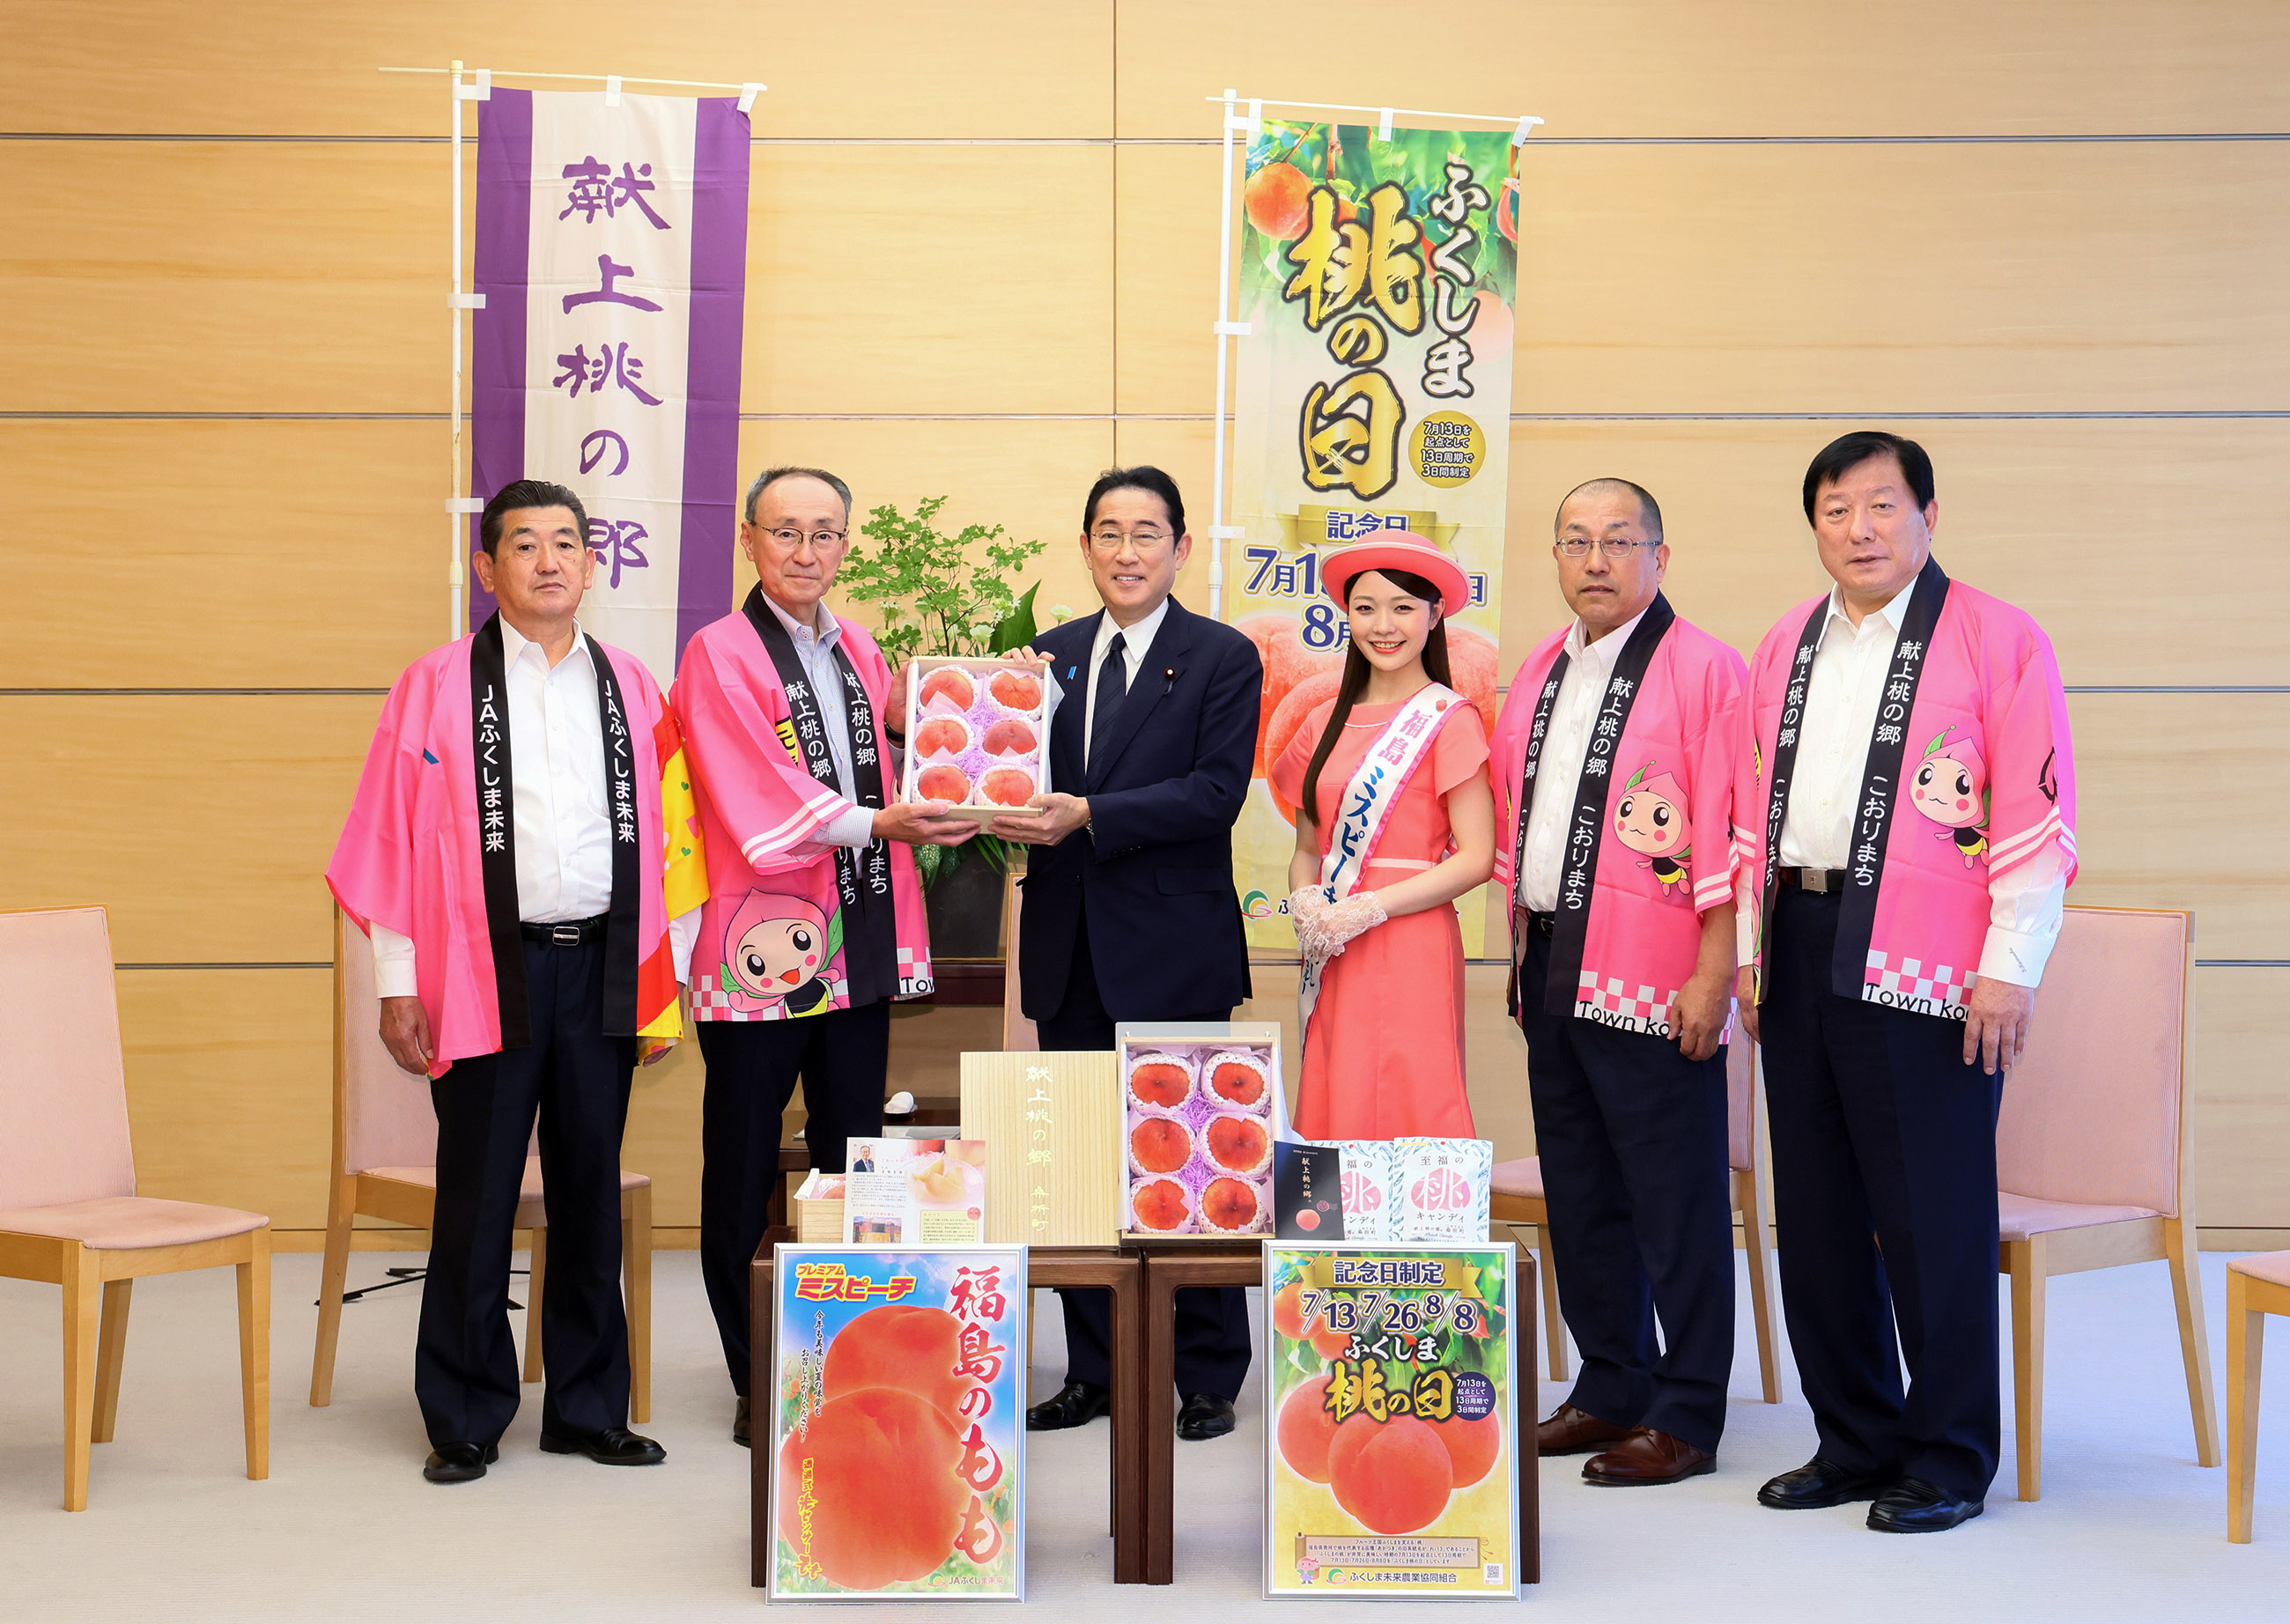 Presentation of Peaches by Mayor of Koori Town, Fukushima Prefecture